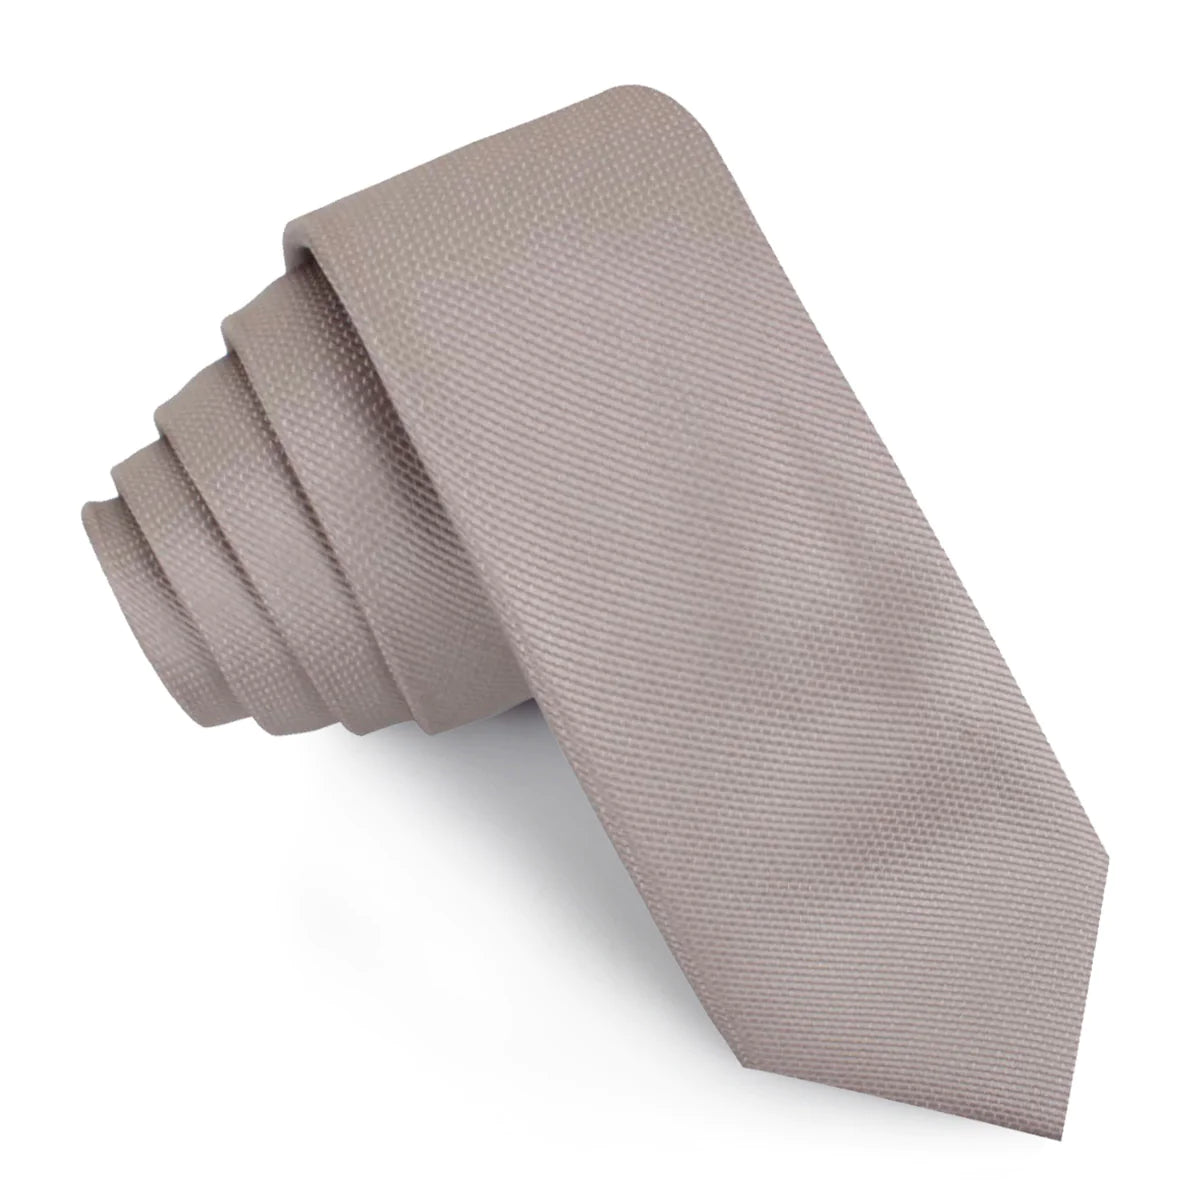 OTAA Tie - Biscotti Grey Weave